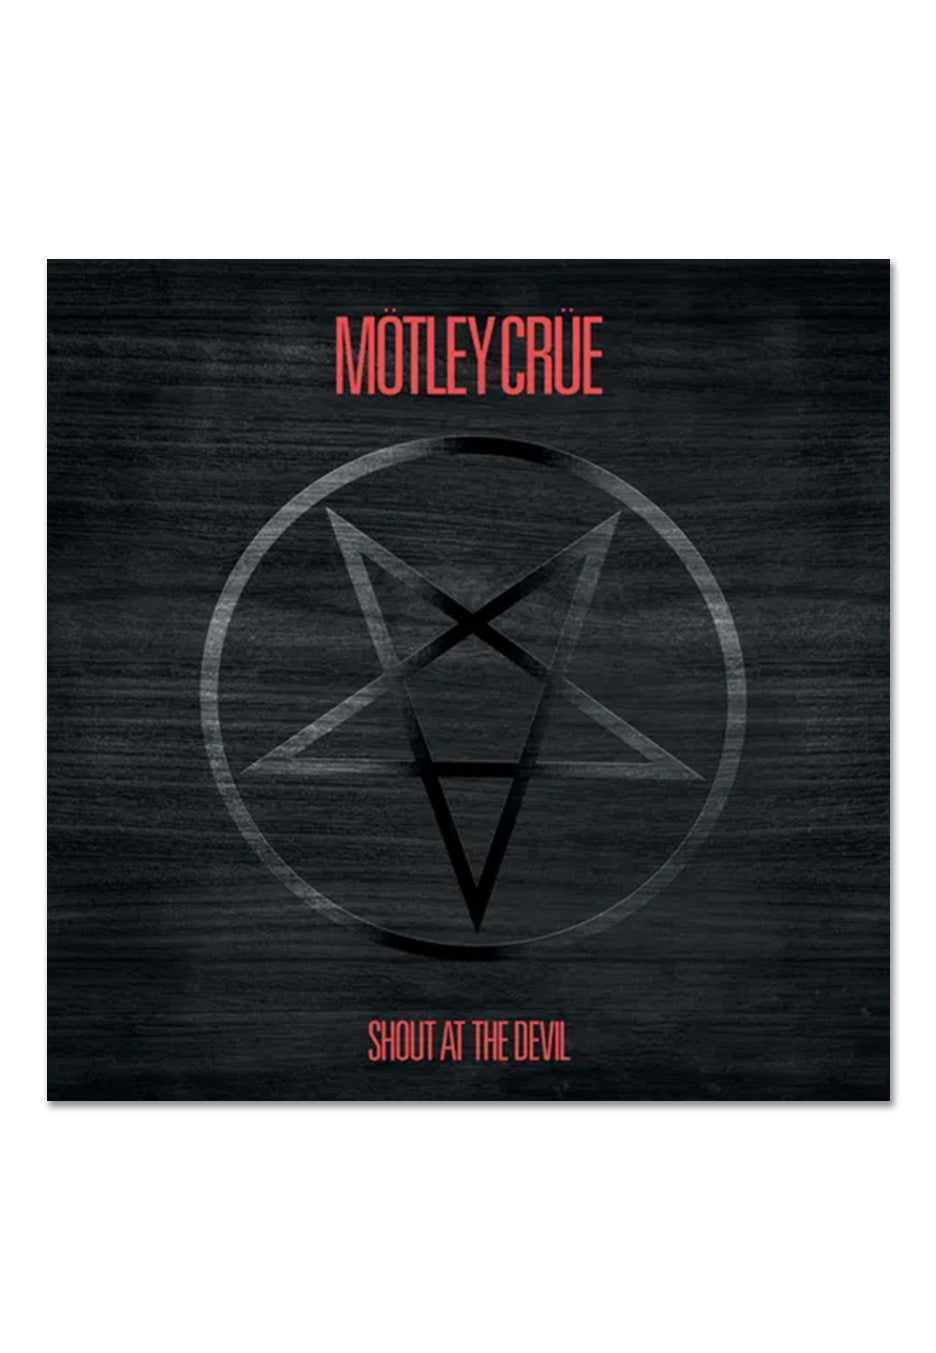 Mötley Crüe - Shout At The Devil (40th Anniversary) Ltd. - Picture Vinyl 